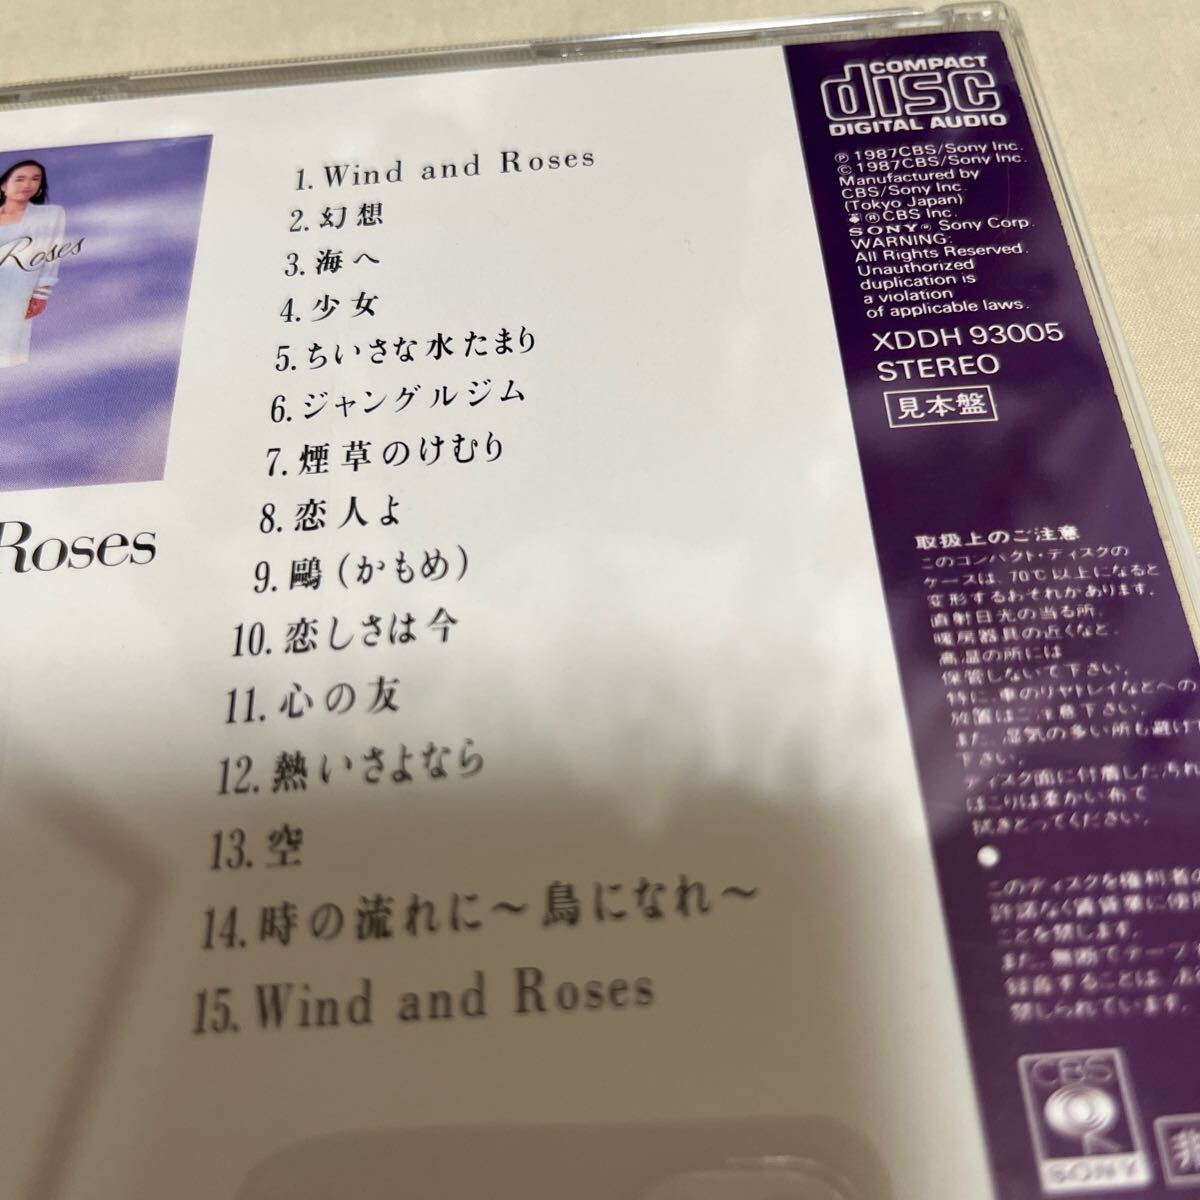 CD Mayumi Itsuwa the15th anniversary 五輪 真弓 「 Wind and Roses 」 1987 XDDH 93005 _画像5